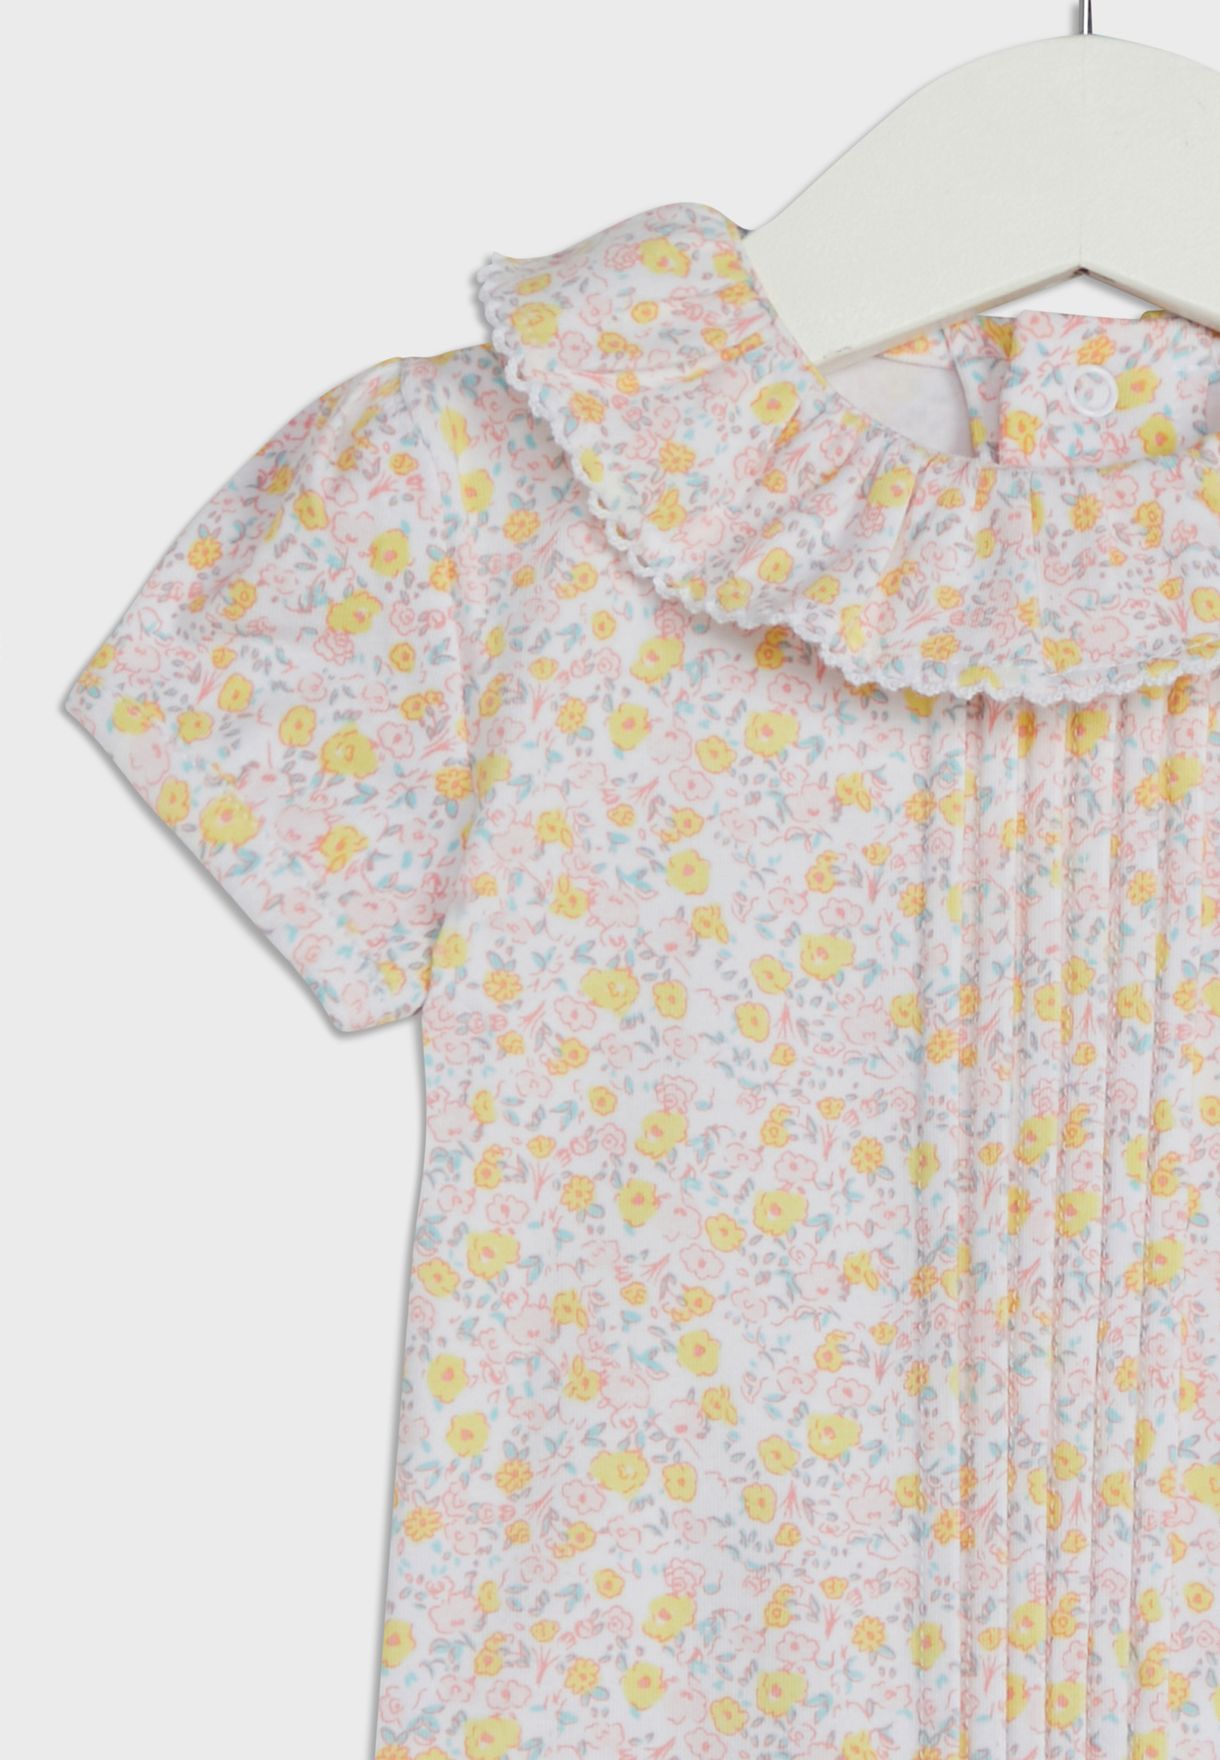 Infant Floral Print Bodysuit